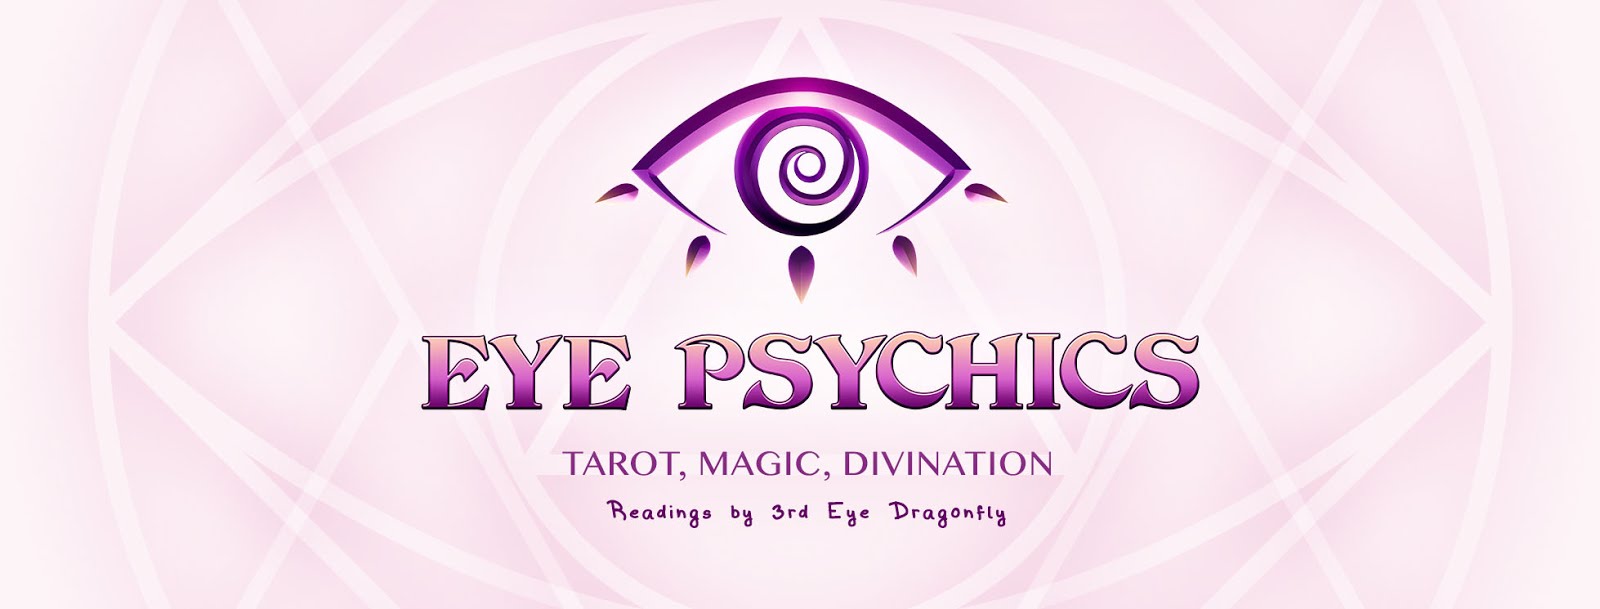 Eye Psychics: Tarot, Magic, Divination